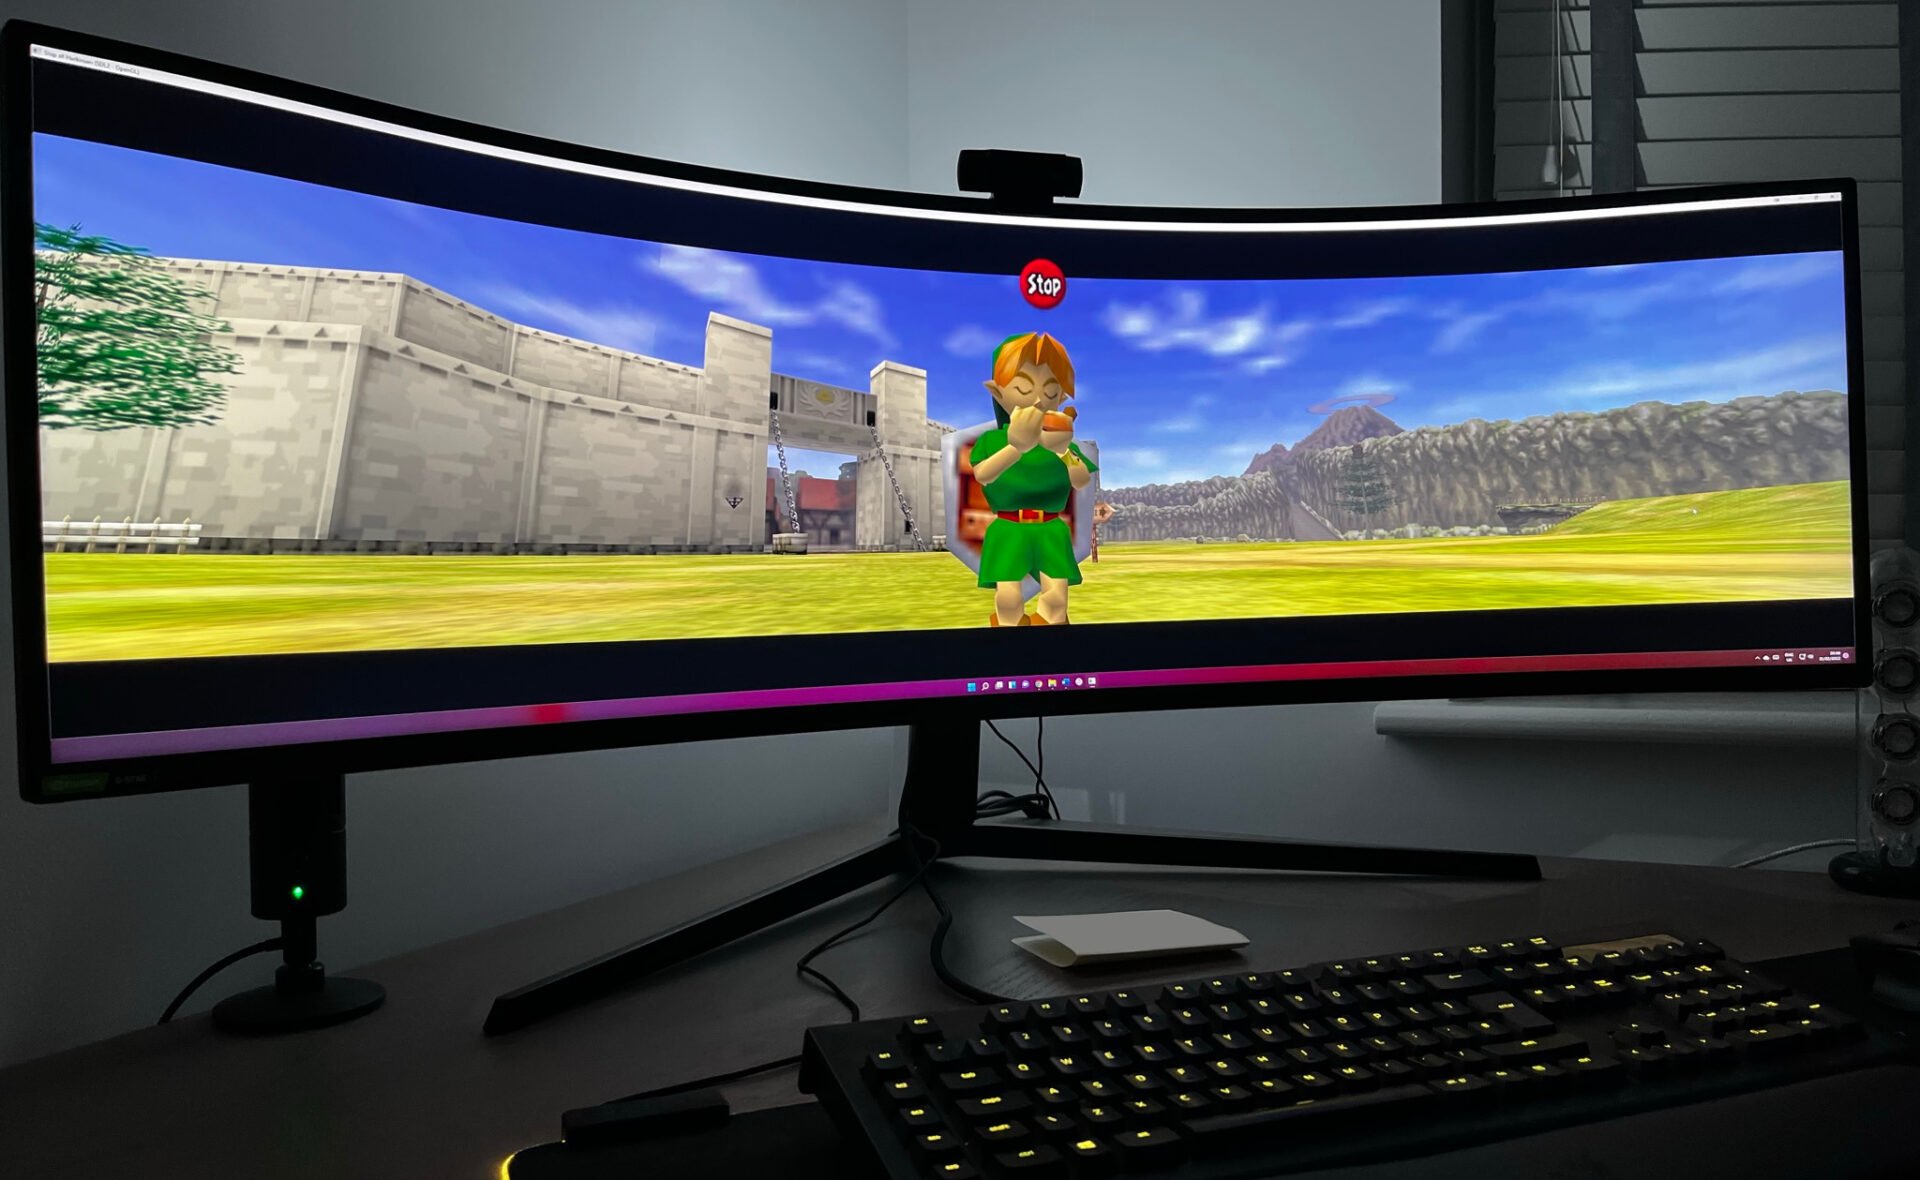 Zelda: Ocarina of Time hits Wii U Virtual Console in Europe, US to come –  GameSkinny